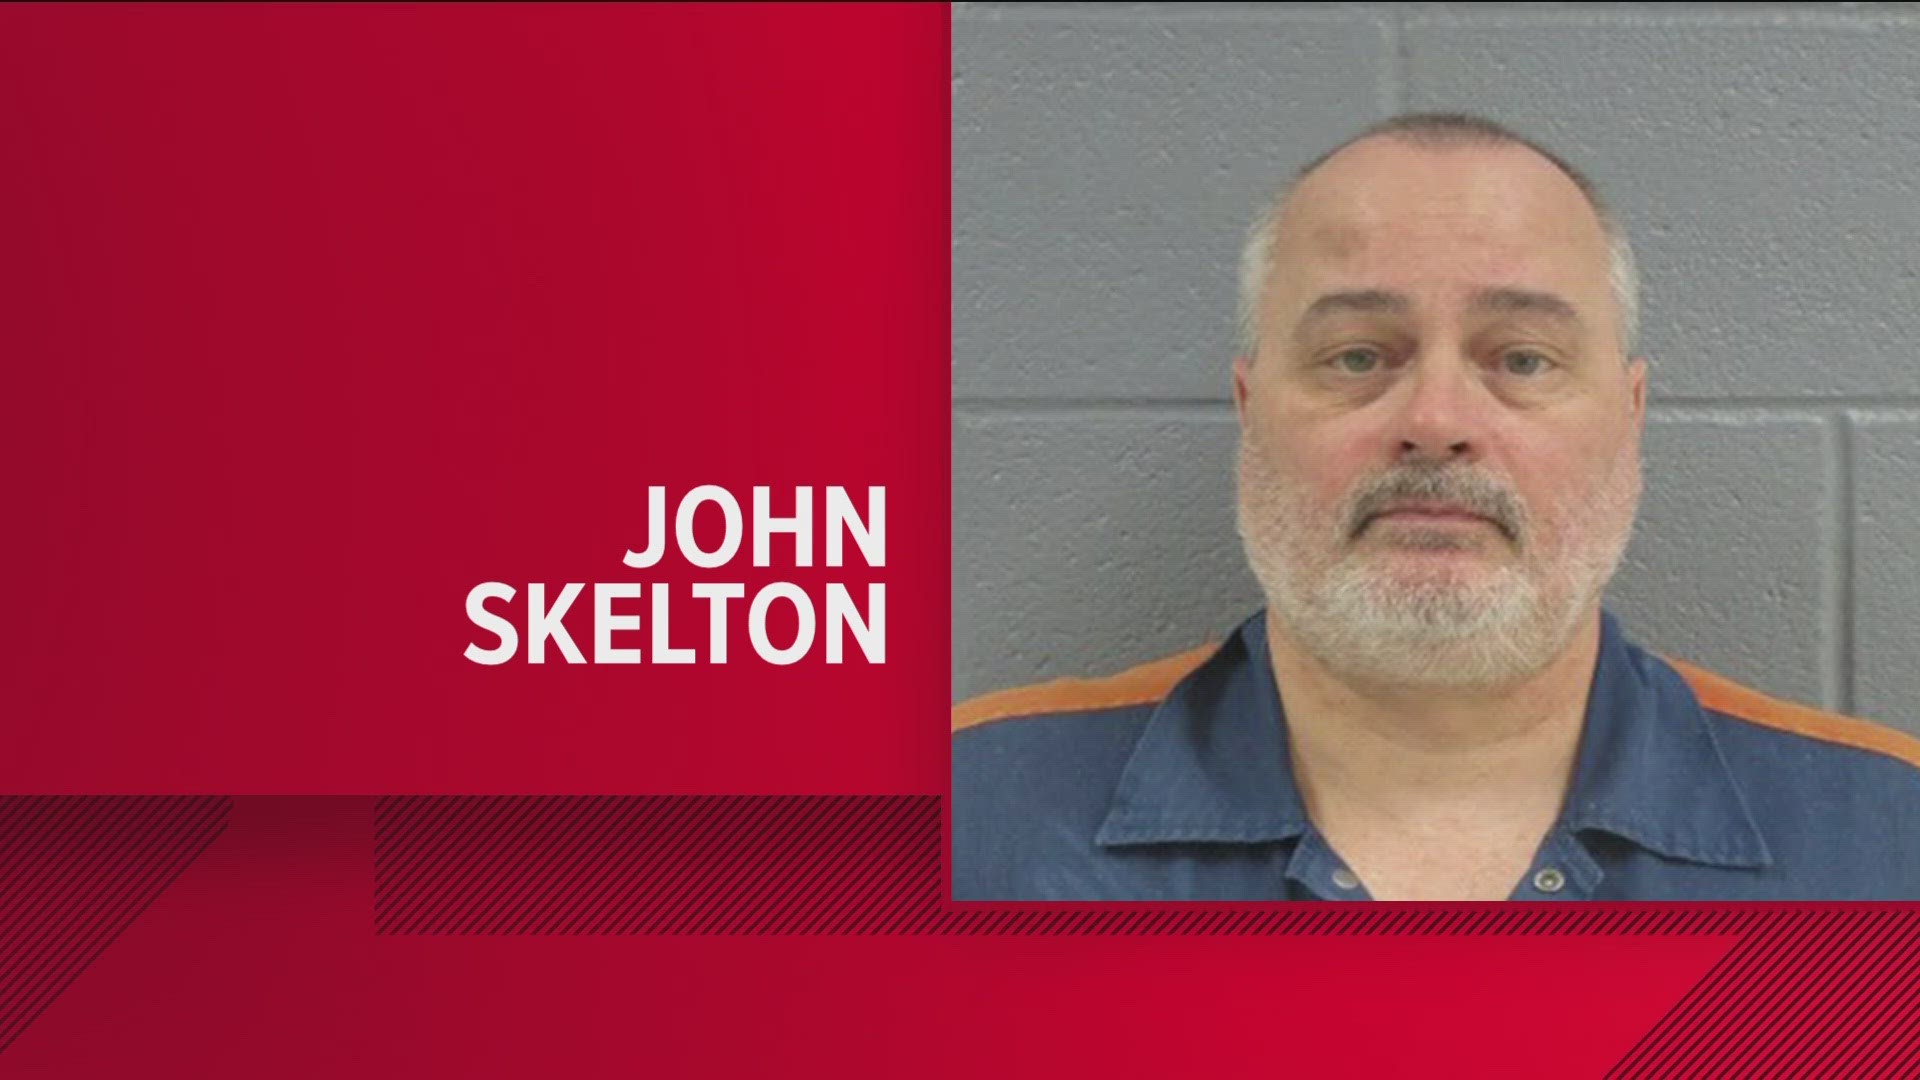 John Skelton's maximum sentence is set to expire Nov. 29, 2025. He was previously denied parole in 2020.